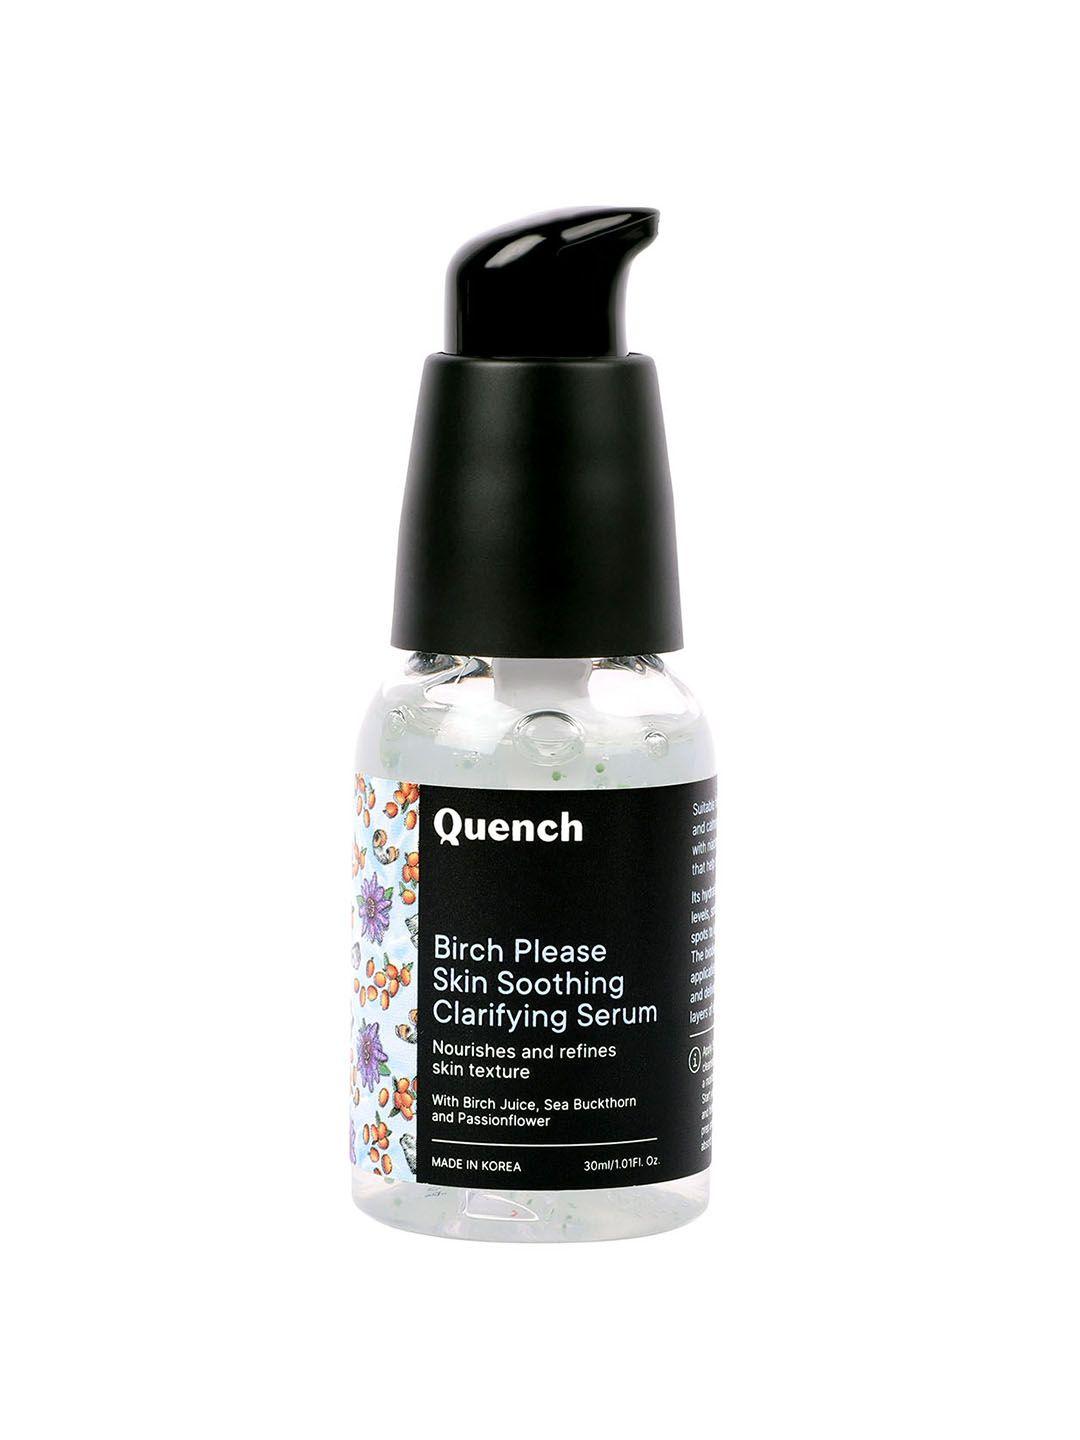 quench botanics birch please skin soothing clarifying serum with sea buckthorn - 30ml